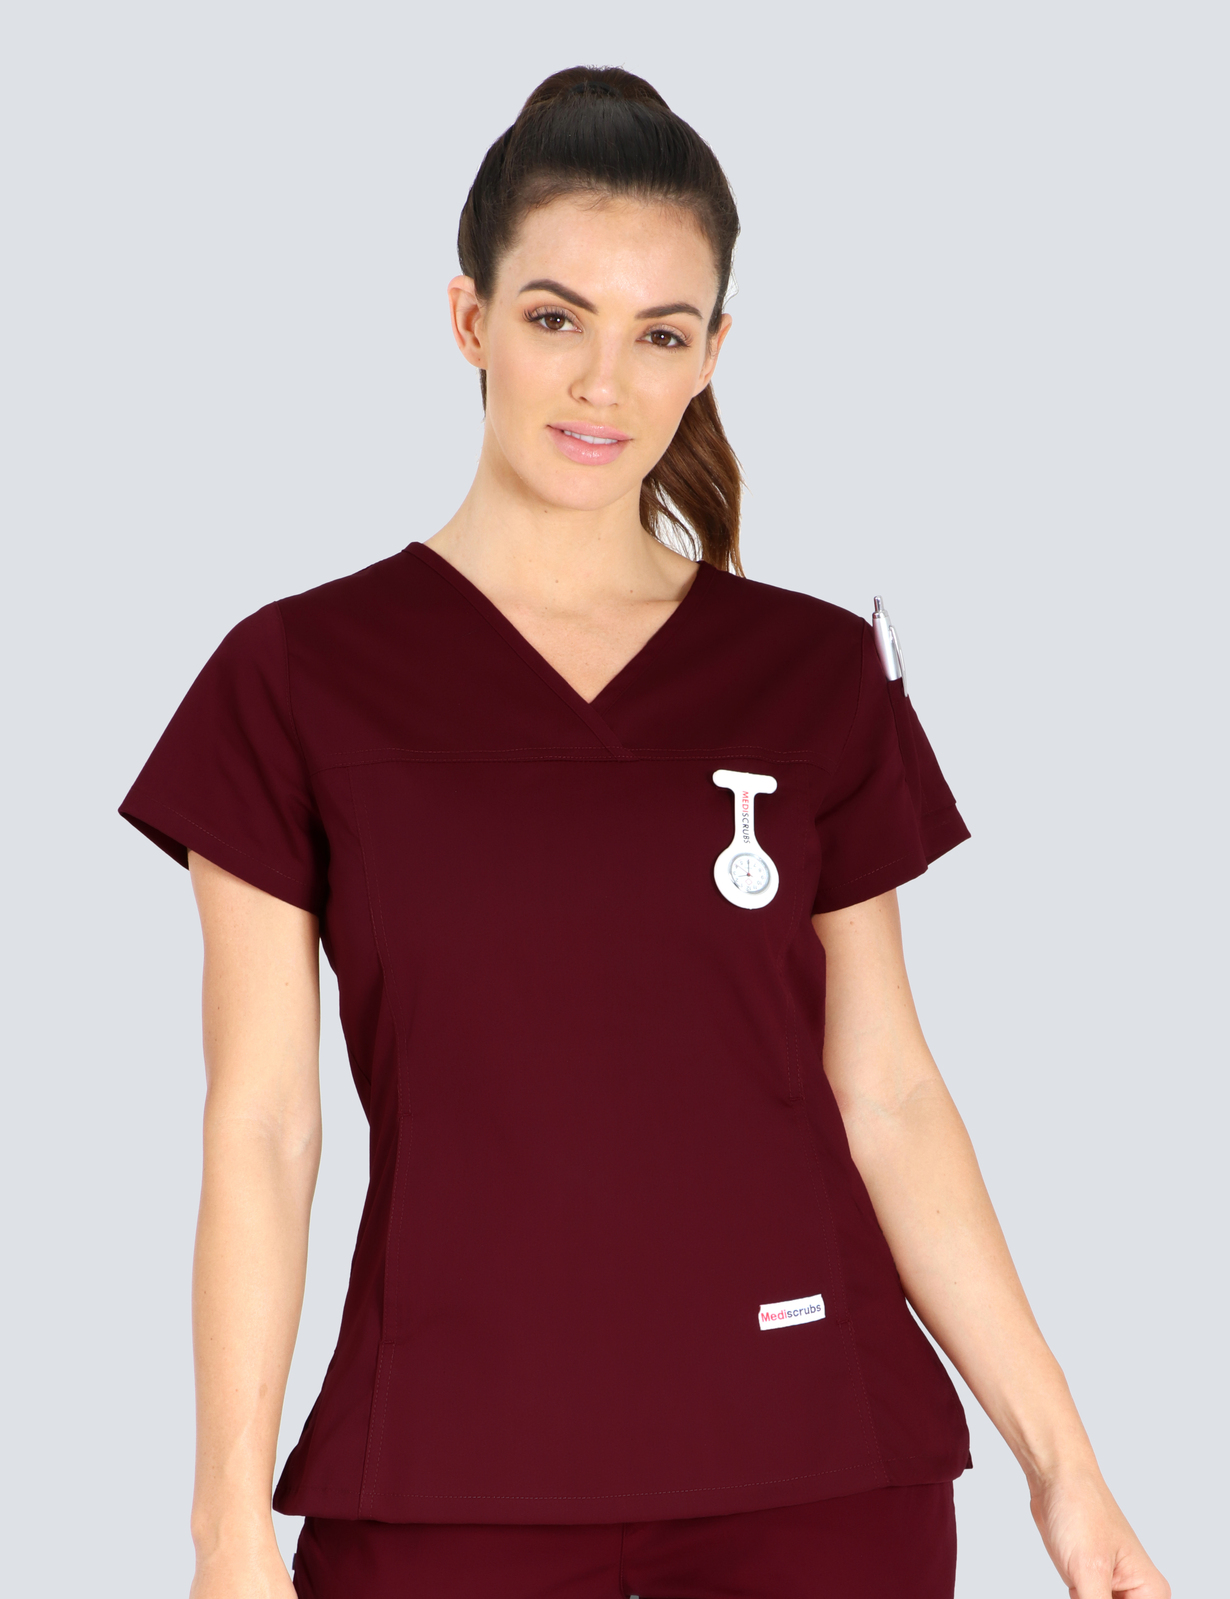 Queensland Children's Hospital Emergency Department Assistant Nurse Unit Manager Uniform Top Bundle  (Women's Fit Top in Burgundy incl Logos)